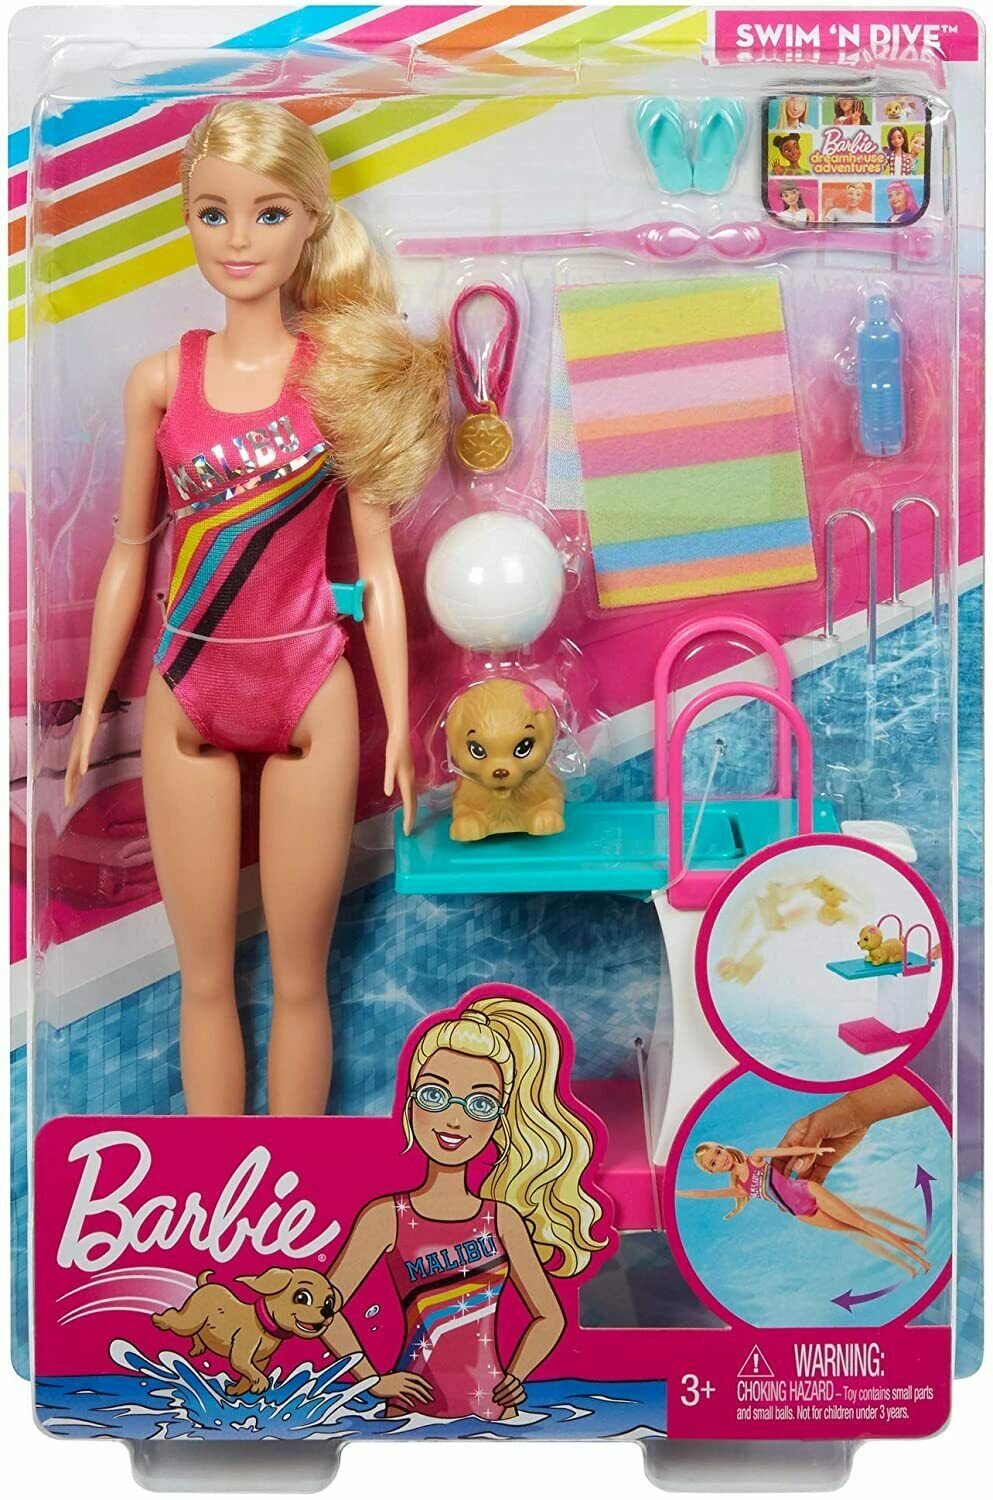 Barbie - The Twins Learn to Swim